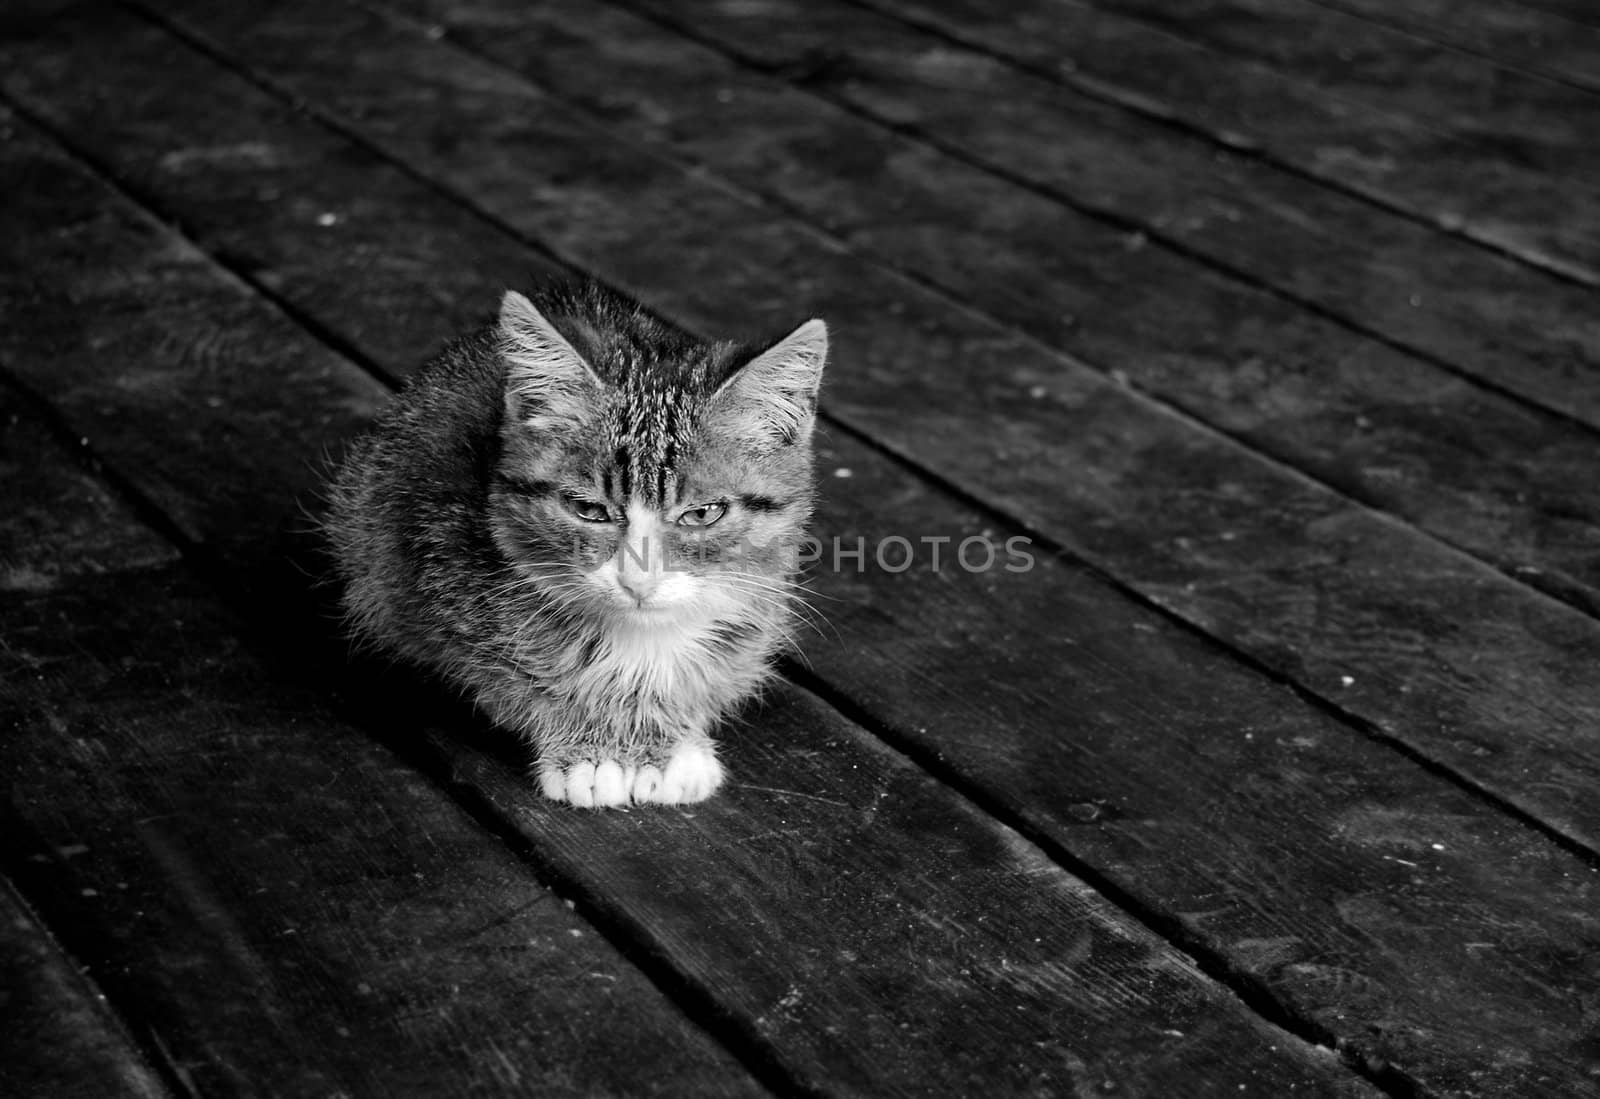 cute kitten sitting on wooden floor, black and white image